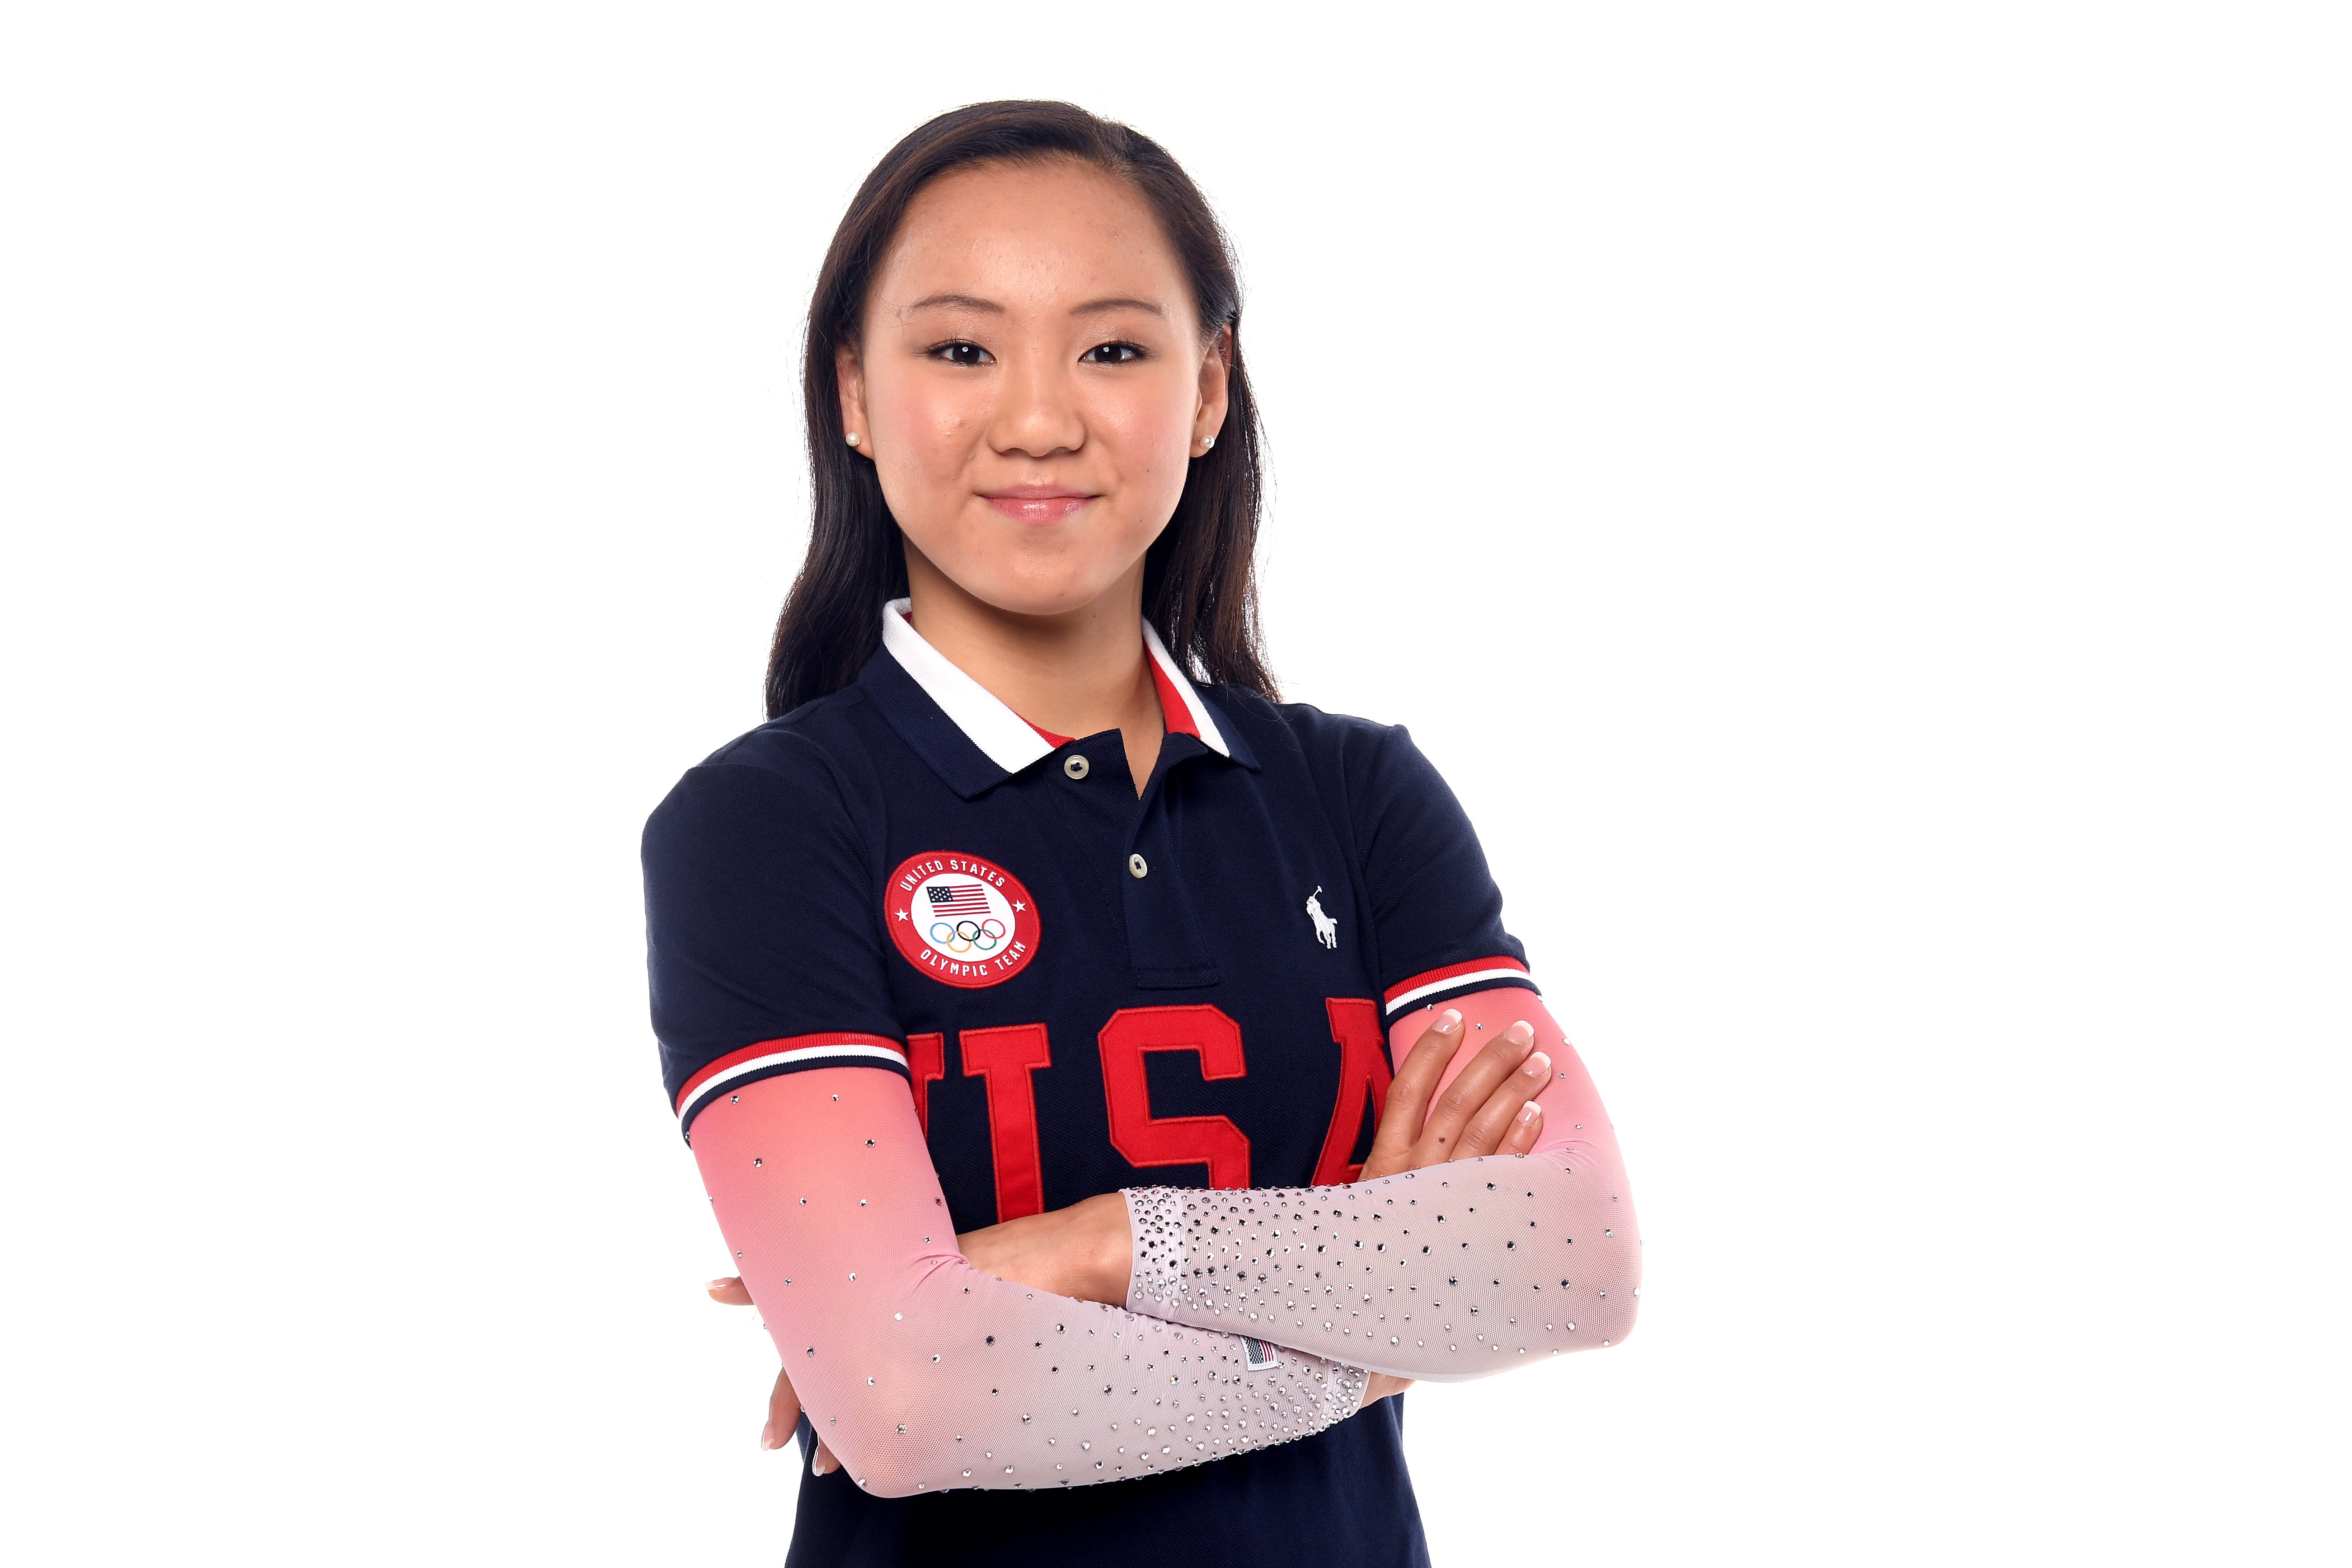 Gymnast Kara Eaker was named as an alternate member of the USA’s gymnastics team